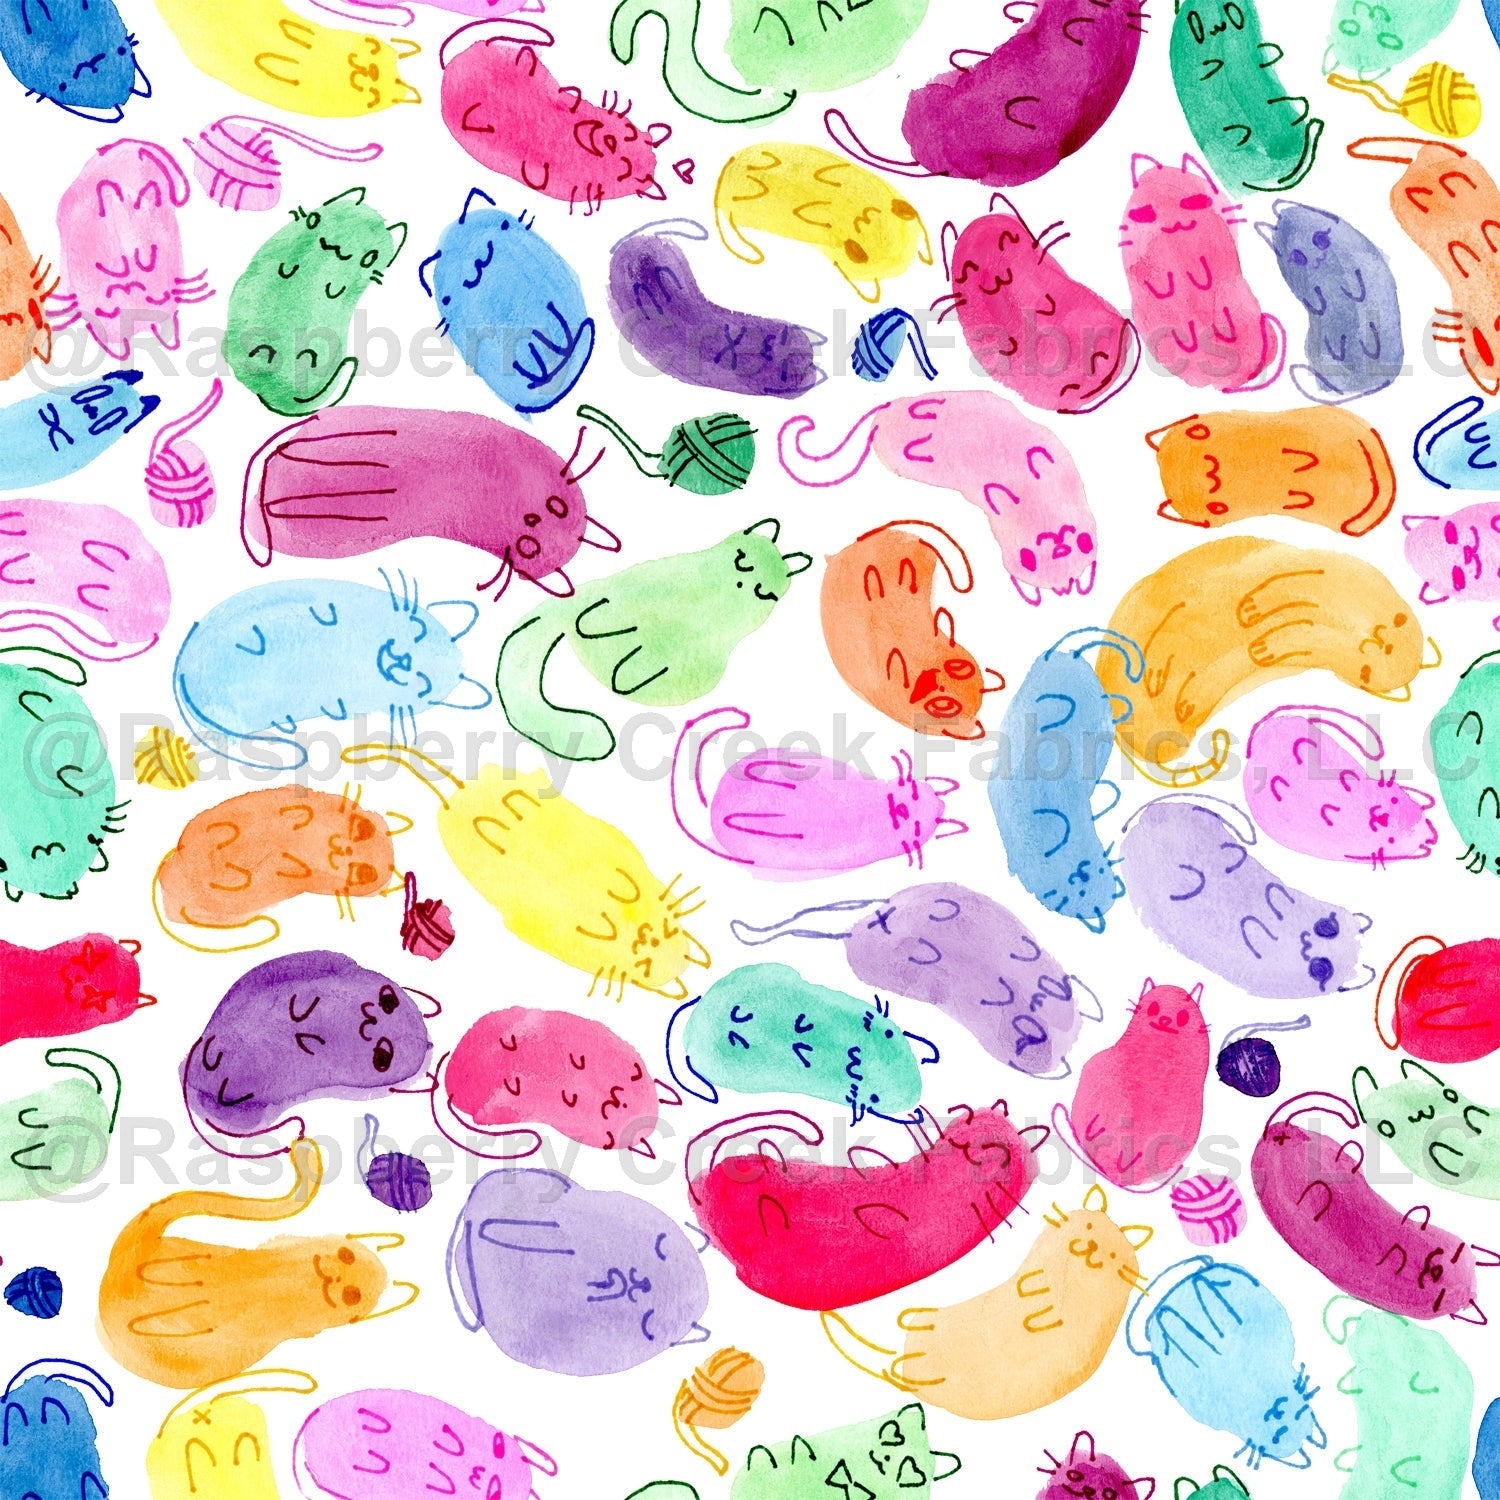 Avree's Watercolor Jellybean Cats Fabric, Raspberry Creek Fabrics, watermarked